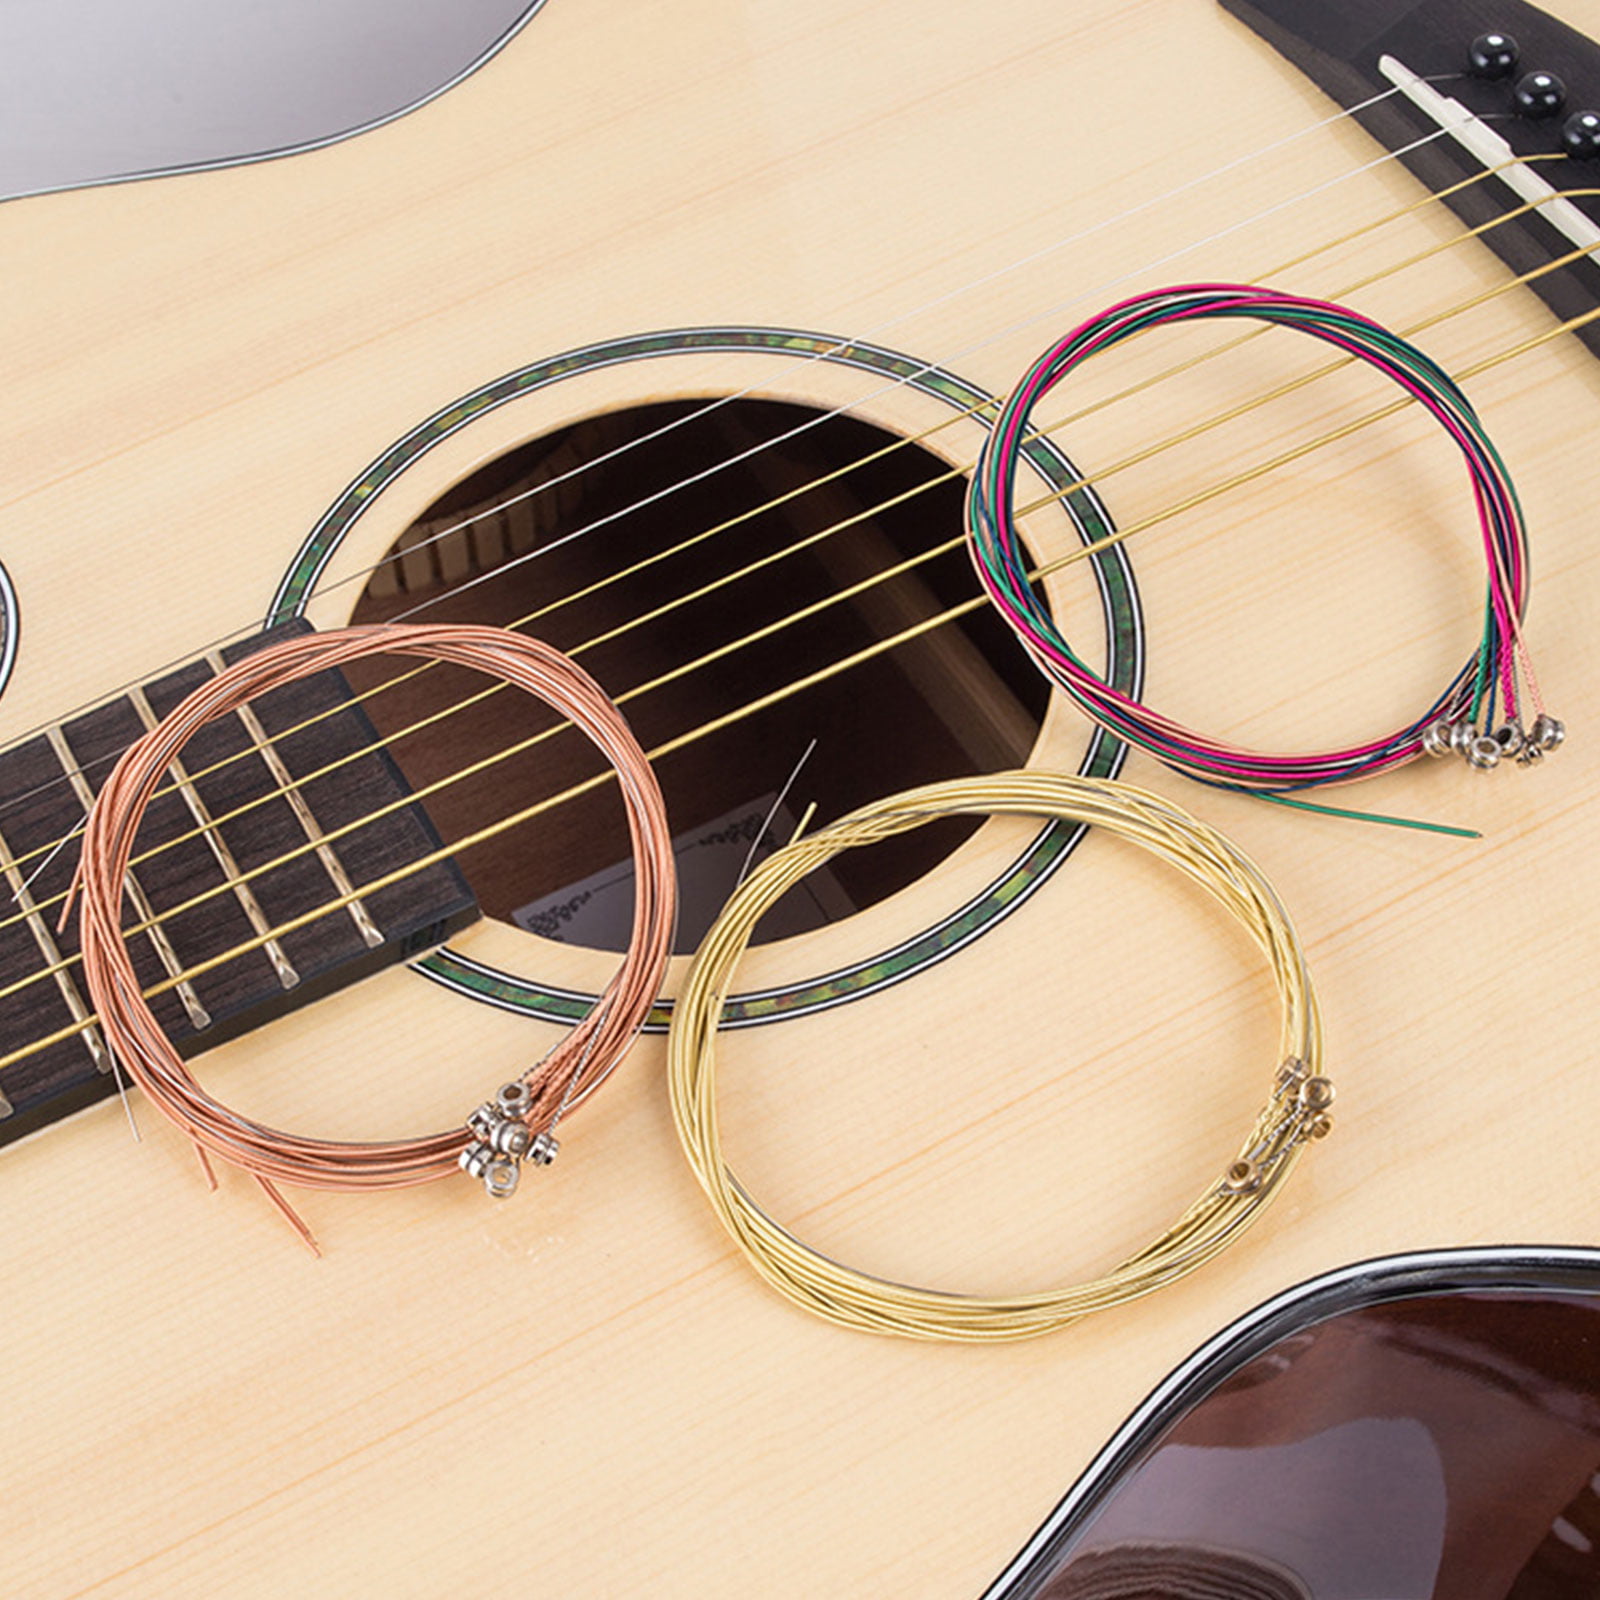 EEEkit 3 Sets of 6 Guitar Strings Replacement Steel String for 